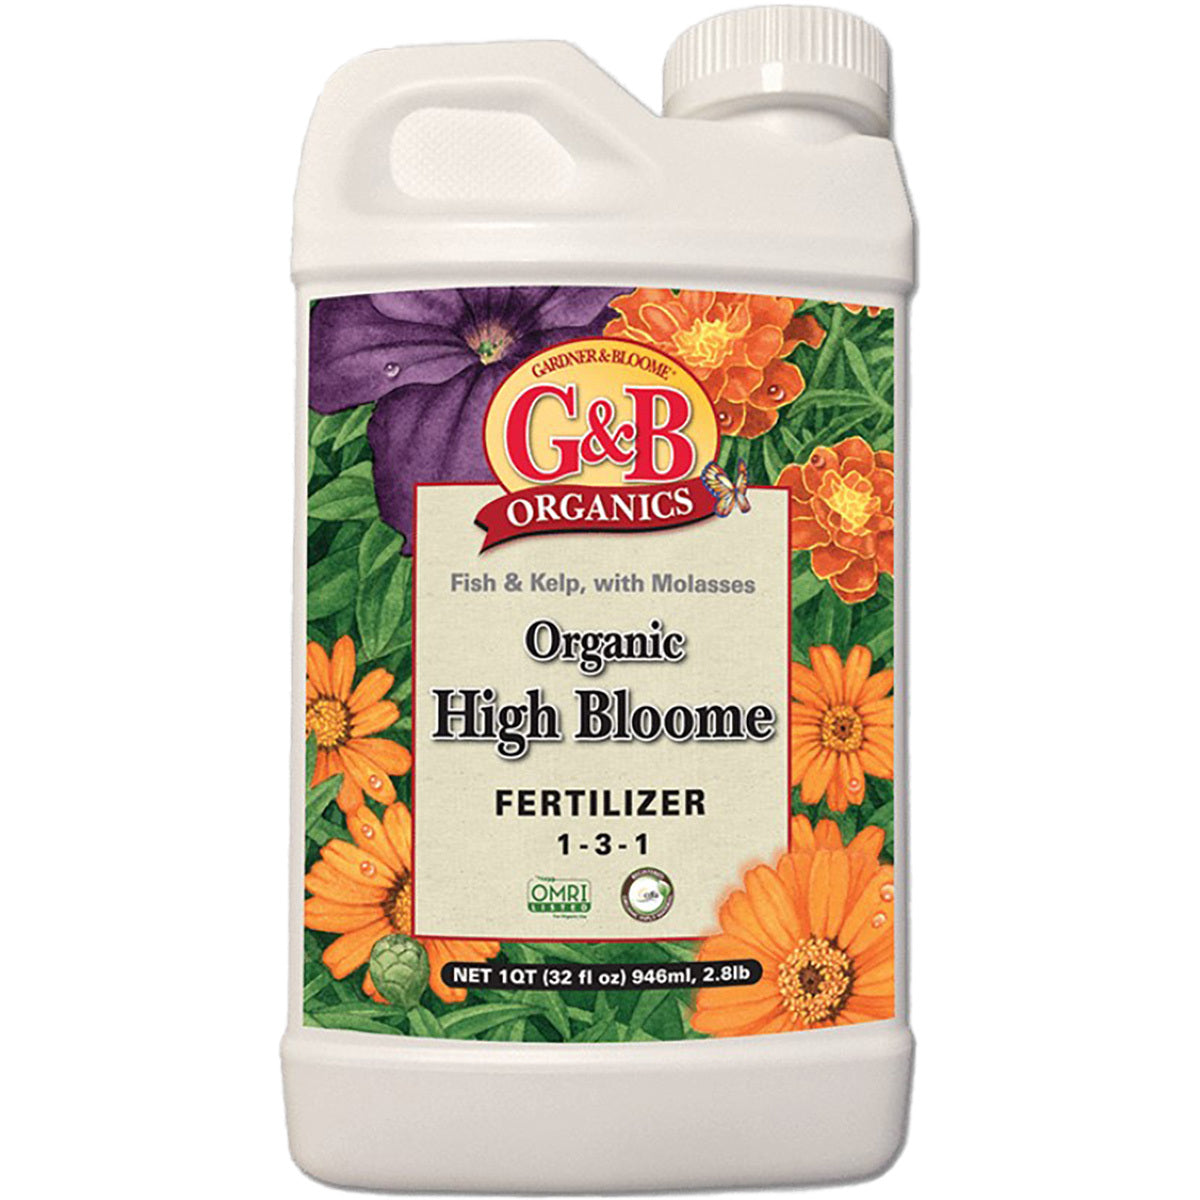 G&B Organics High Bloome Fertilizer (1GAL)